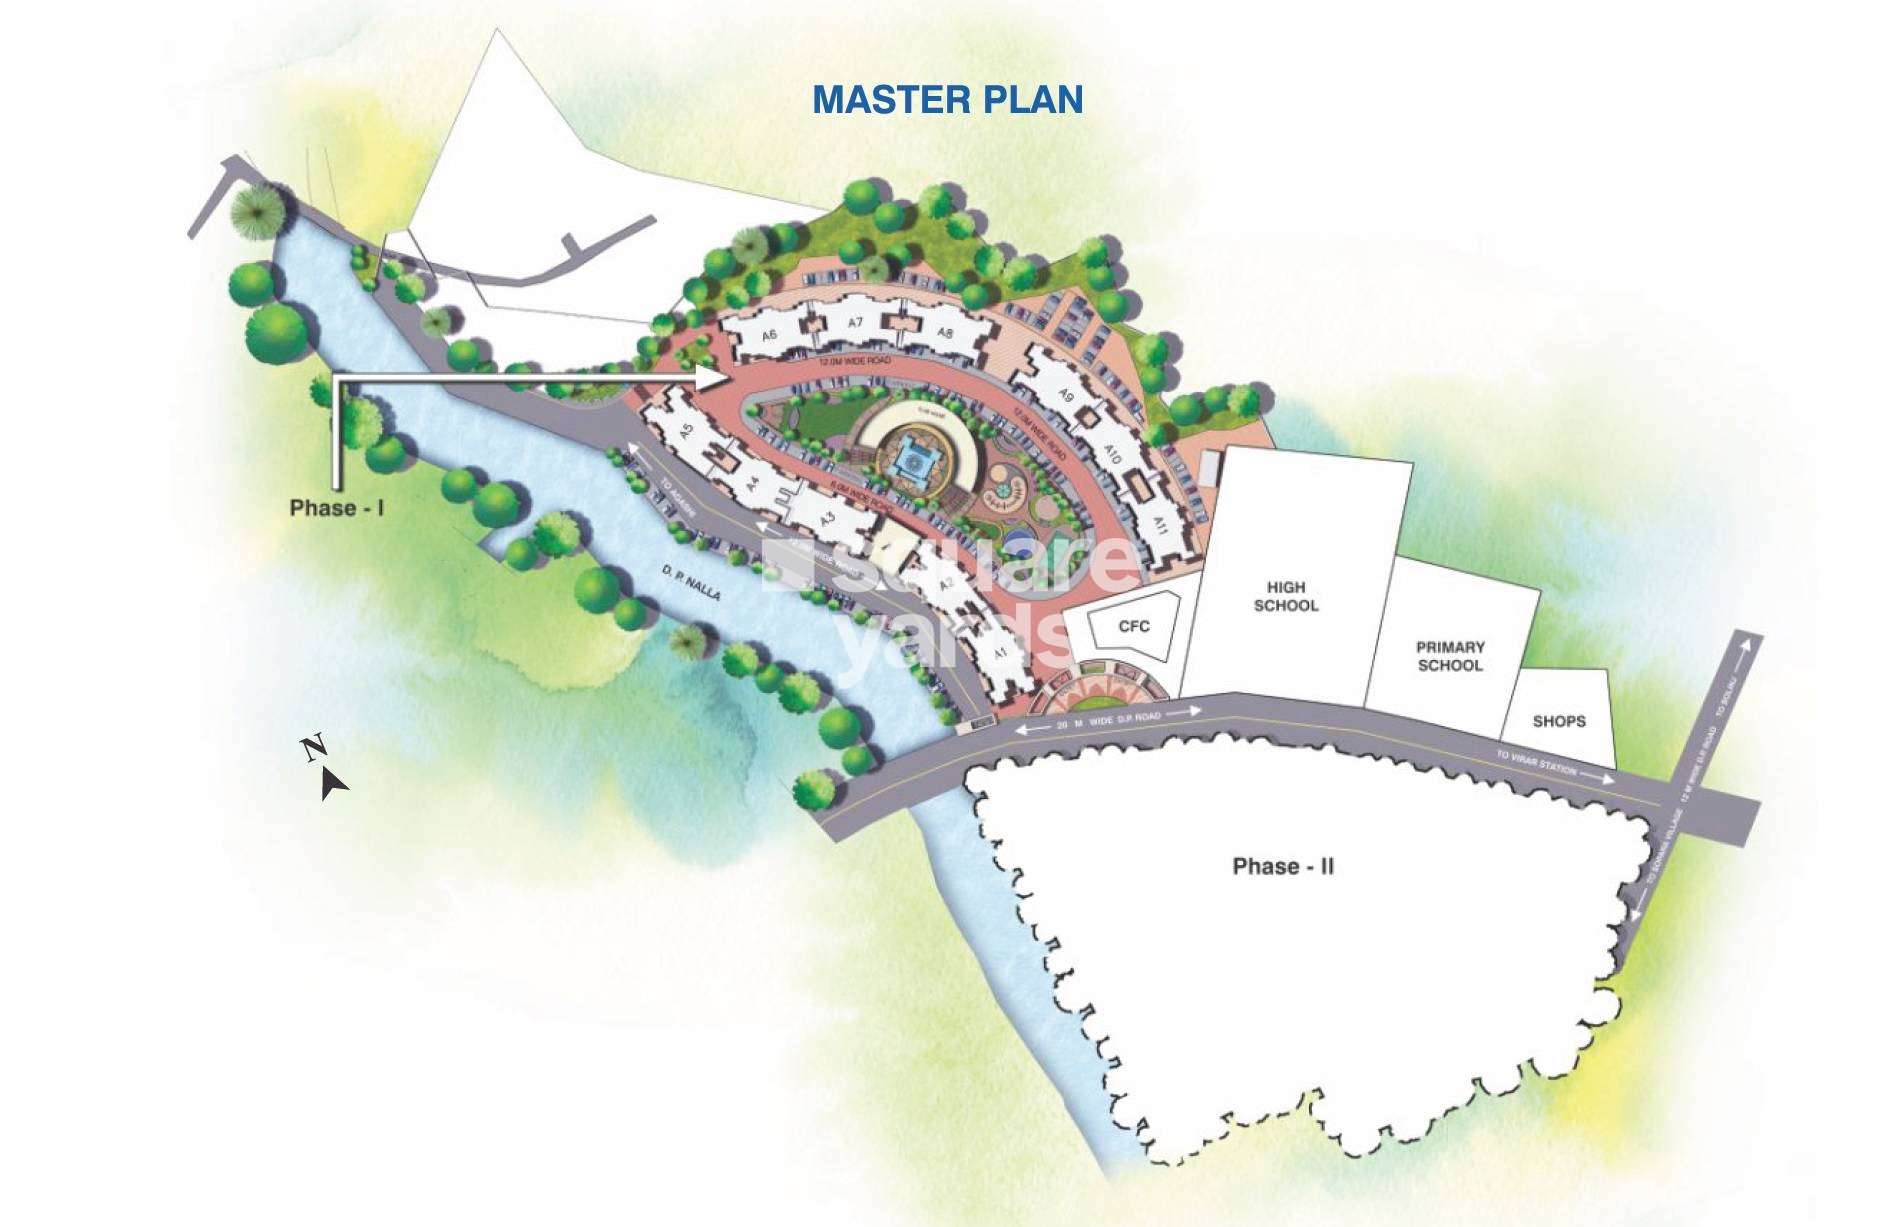 viva city project master plan image1 3404